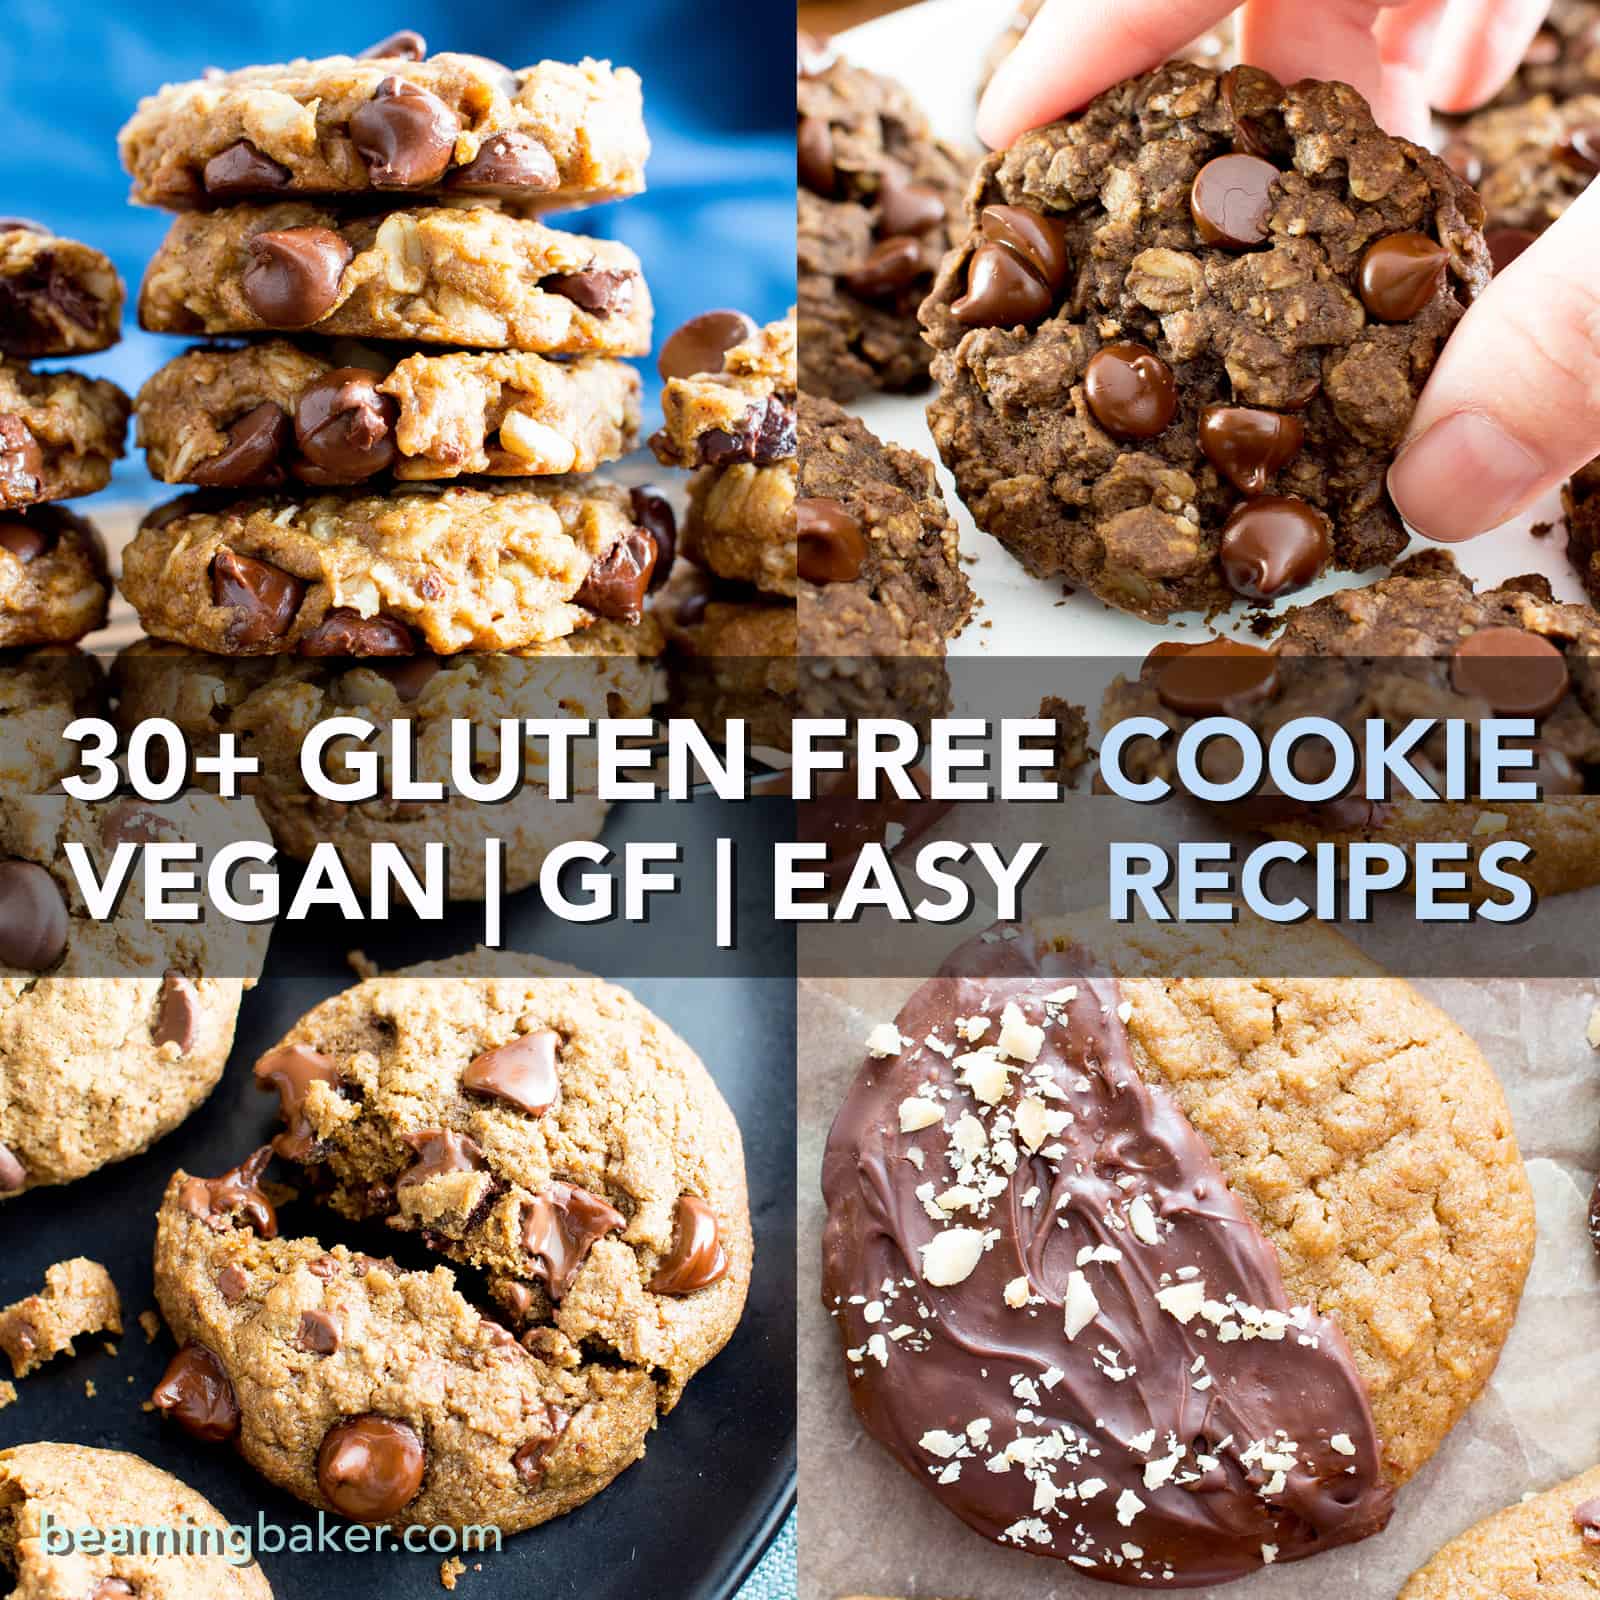 30+ Amazing Gluten-Free Cookie Recipes (Vegan, Dairy-Free, Healthy, GF)